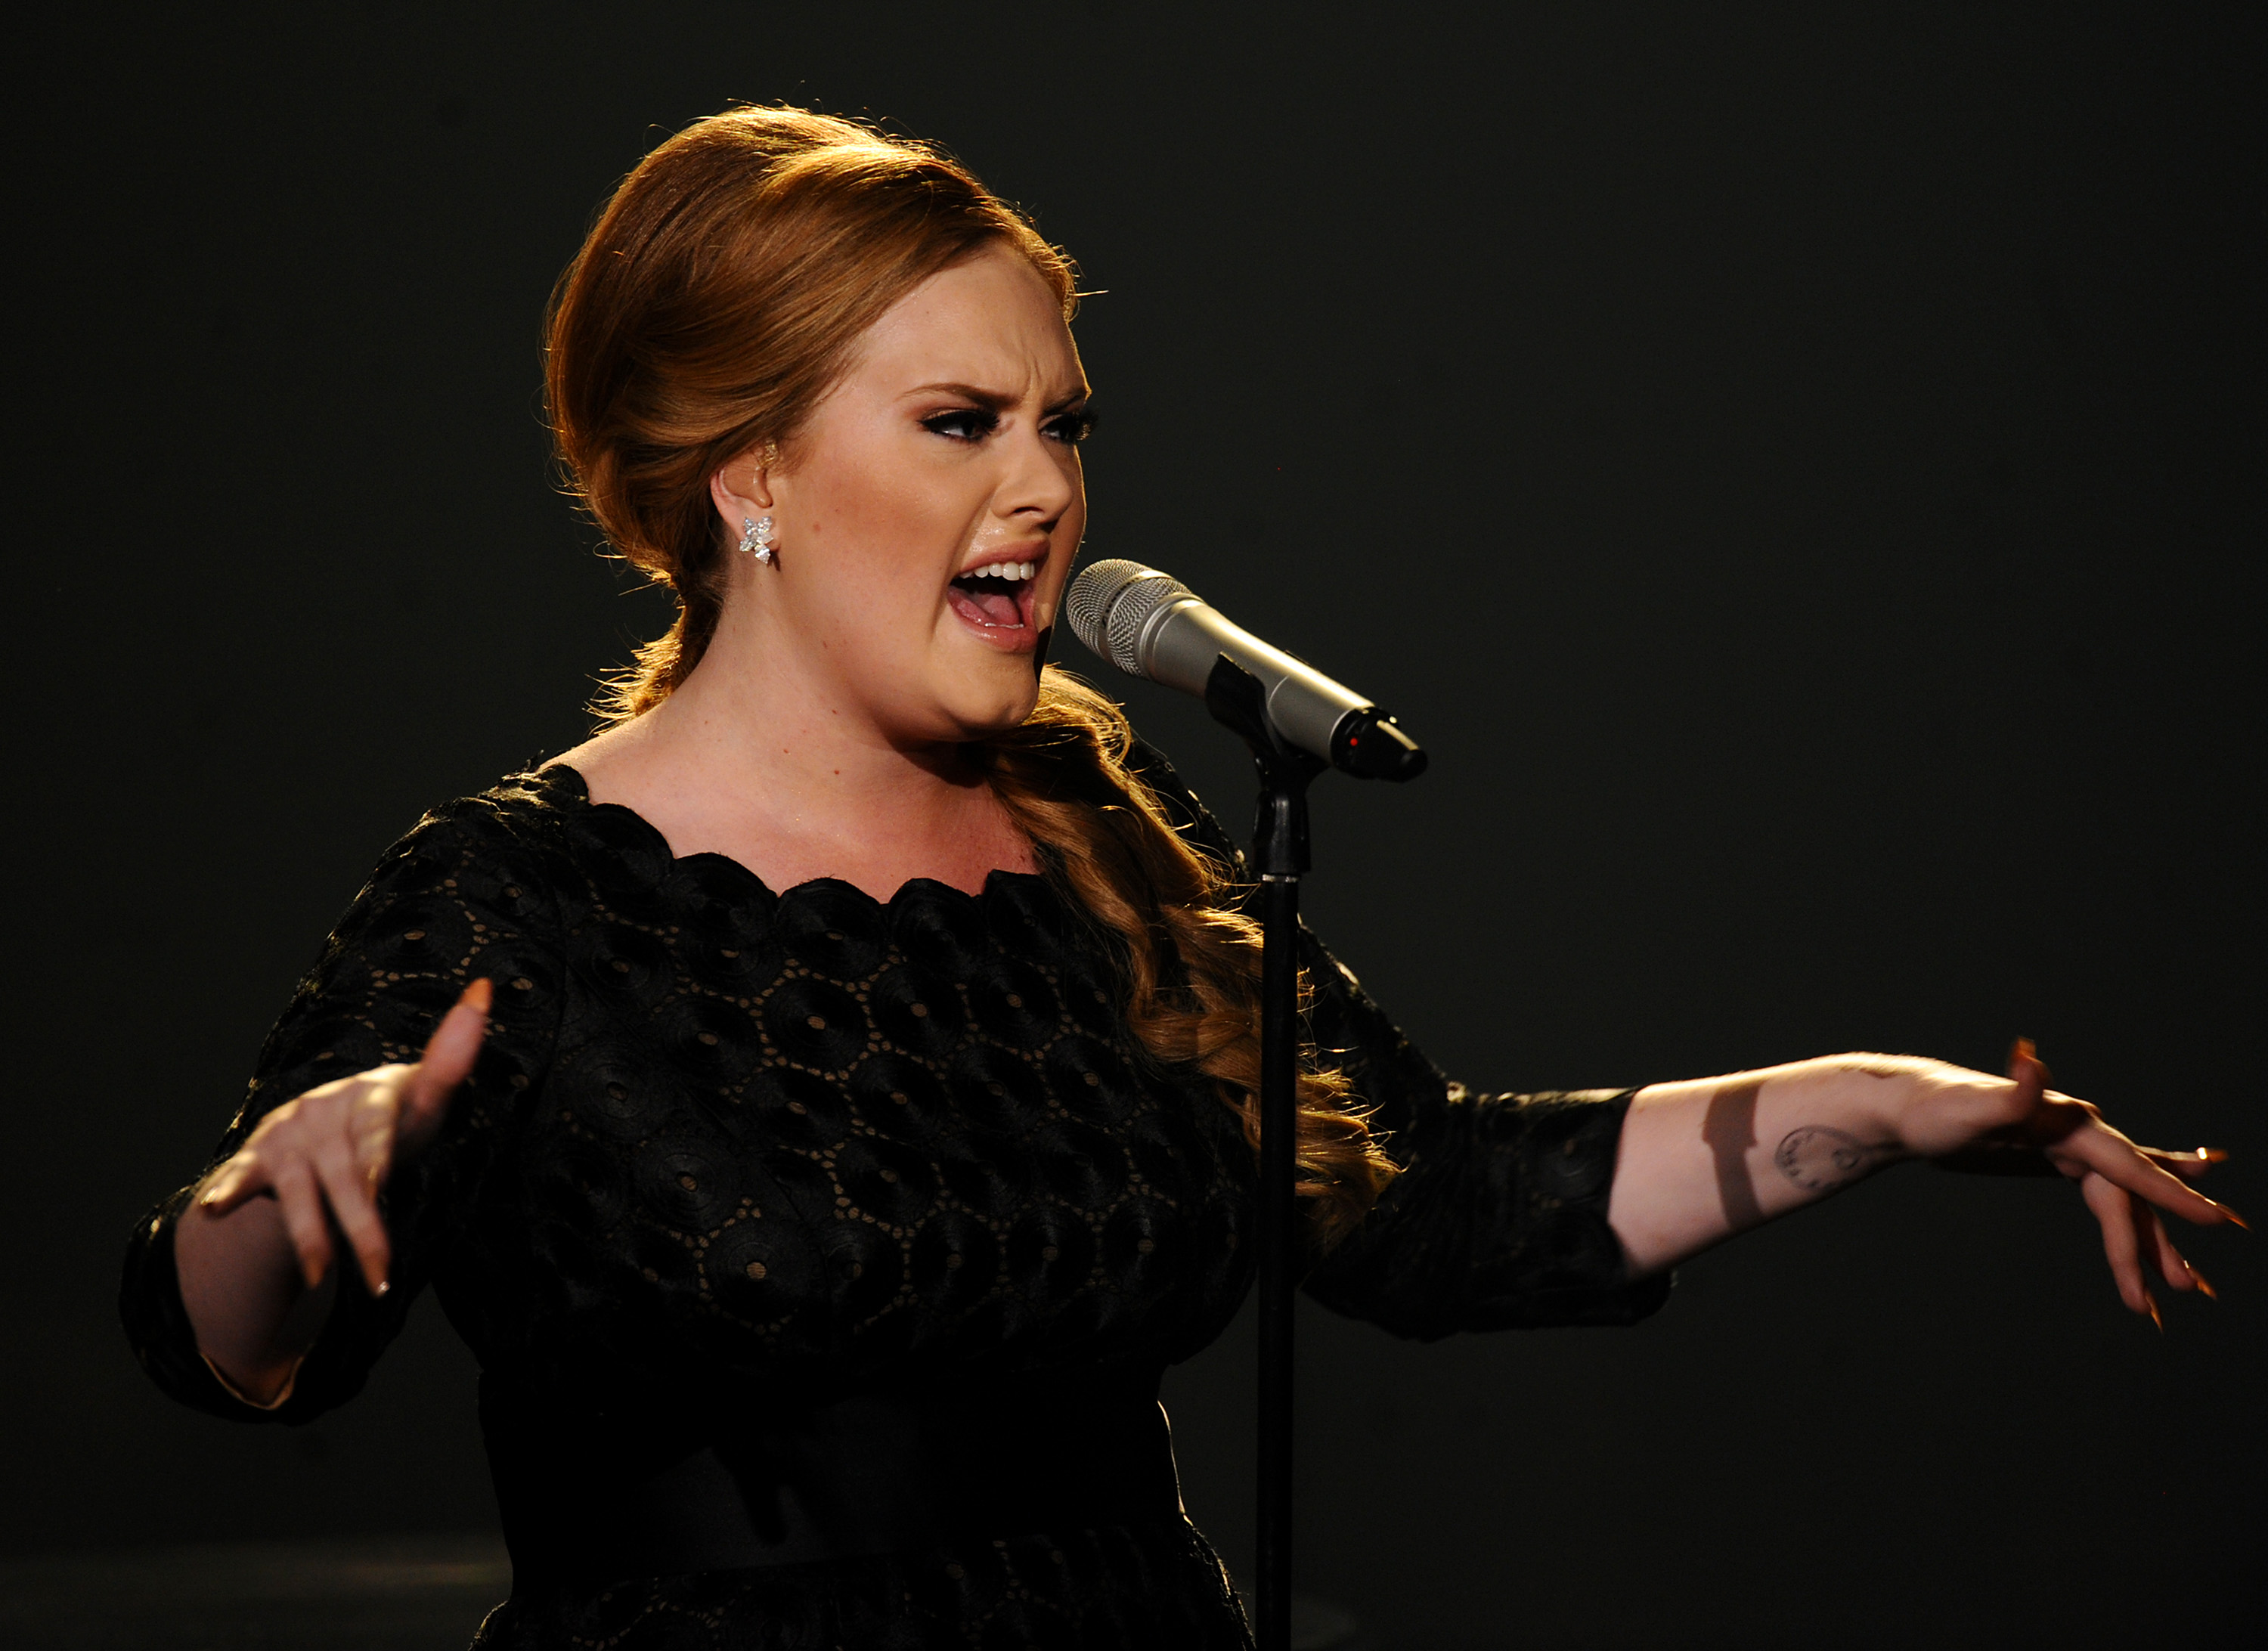 2011 MTV Video Music Awards - Adele